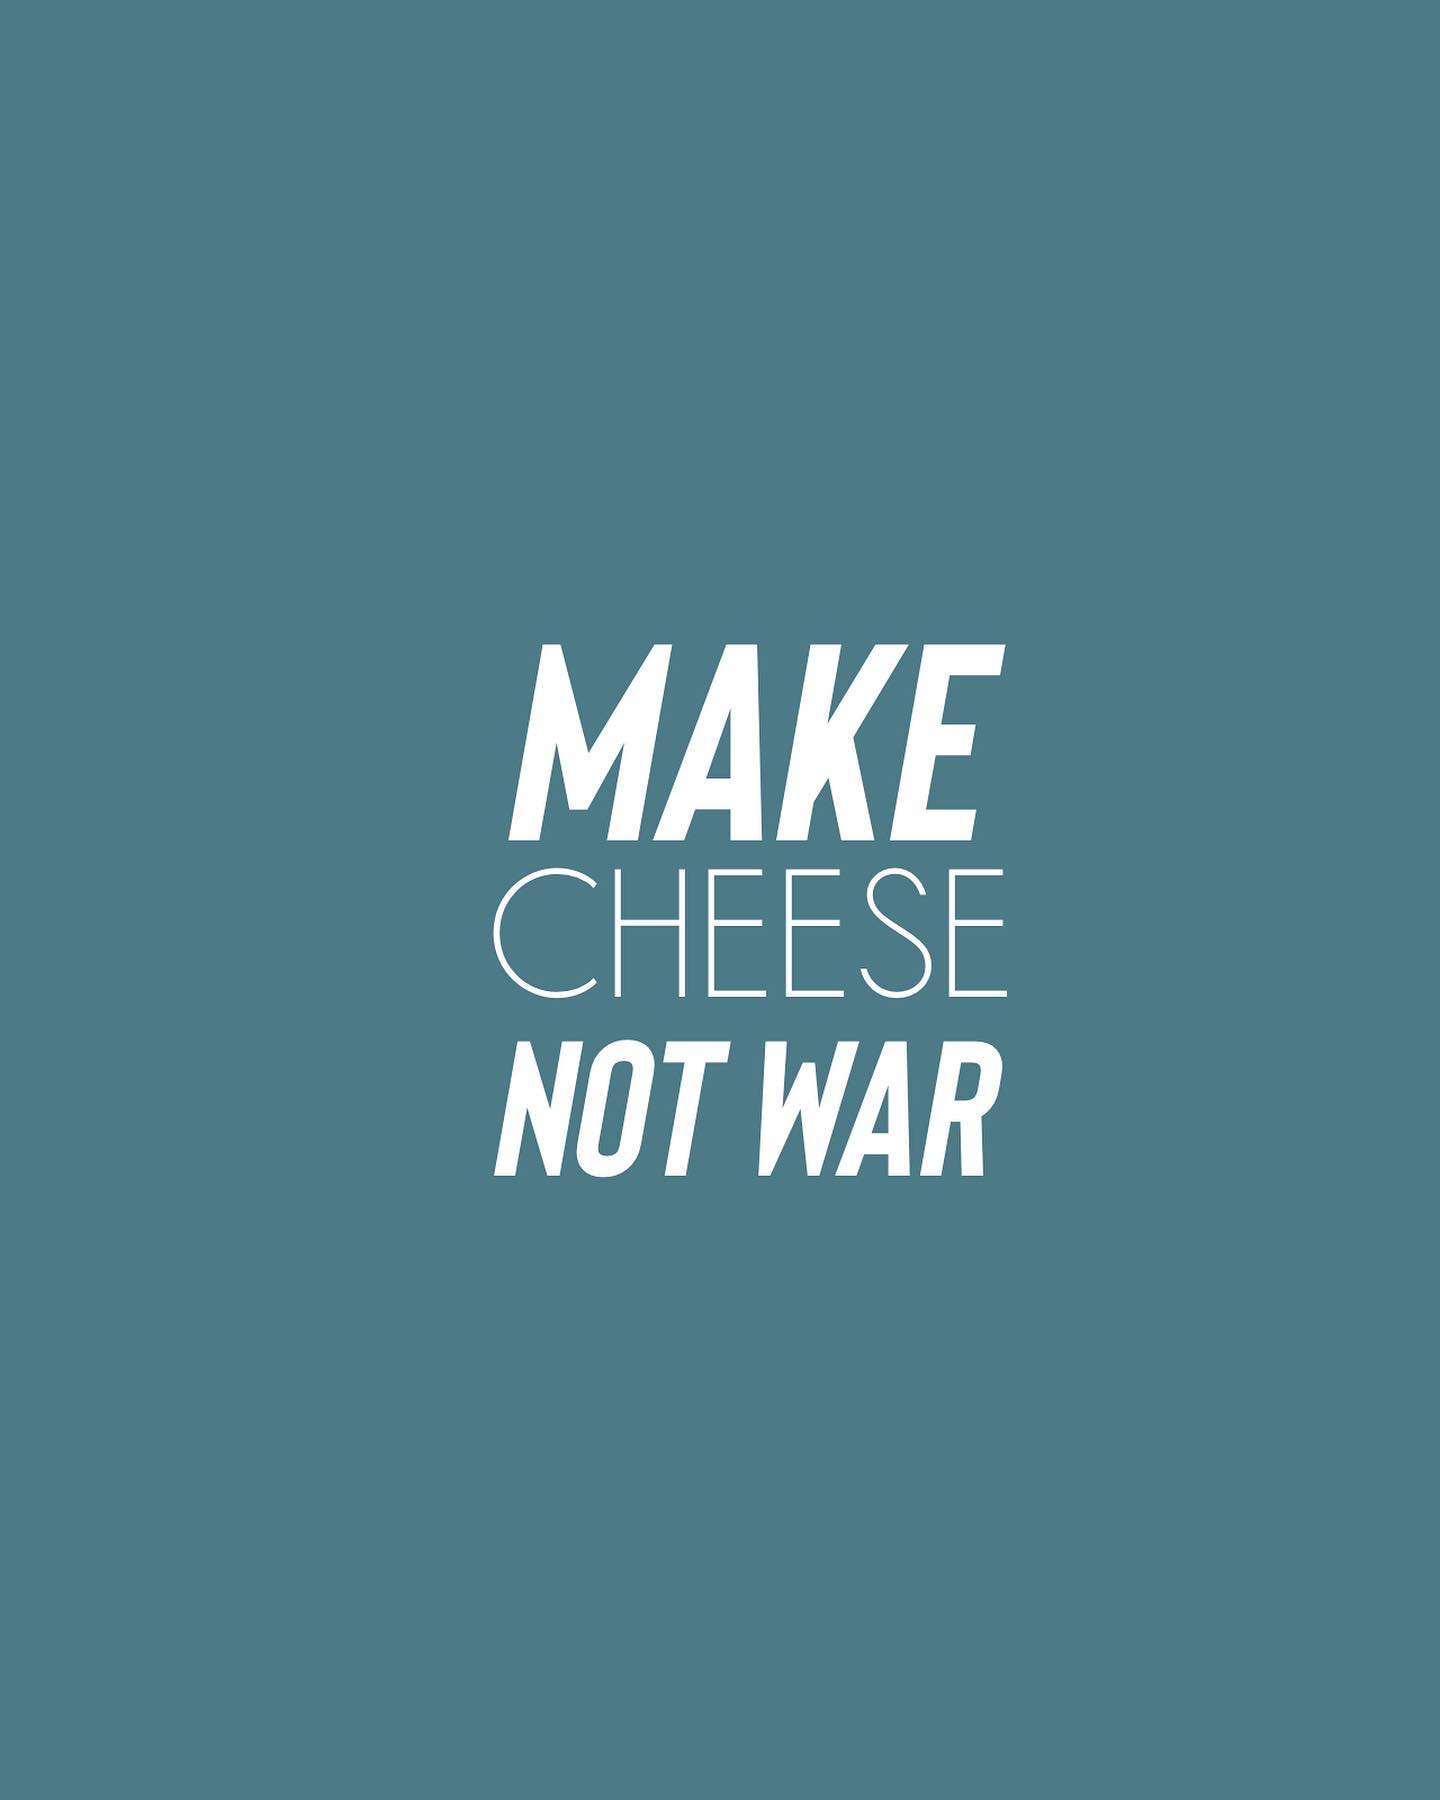 🧀💙💛🧀
.
.
.

#ostesnak #cheesetalks #cheese #cheeseislife #cheeselovers #instacheese #cheeseplease #ost #cheeseblogger #foodie #fromage #stopwarinukraine #quote #cheesequote #cheeserulestheworld